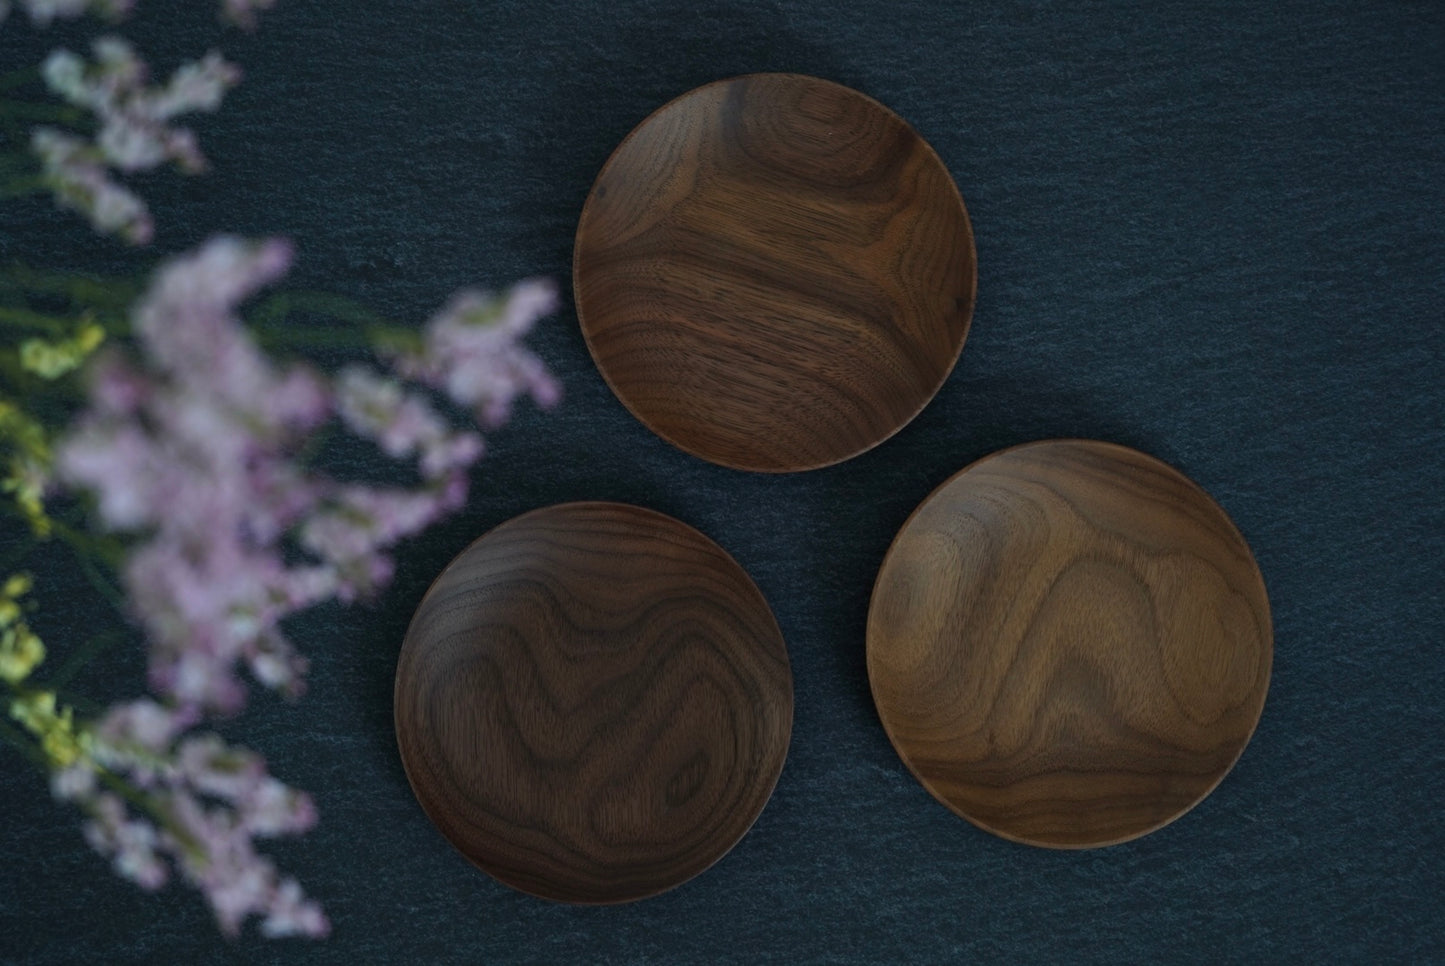 [Sonobe Sangyo] A set of three walnuts